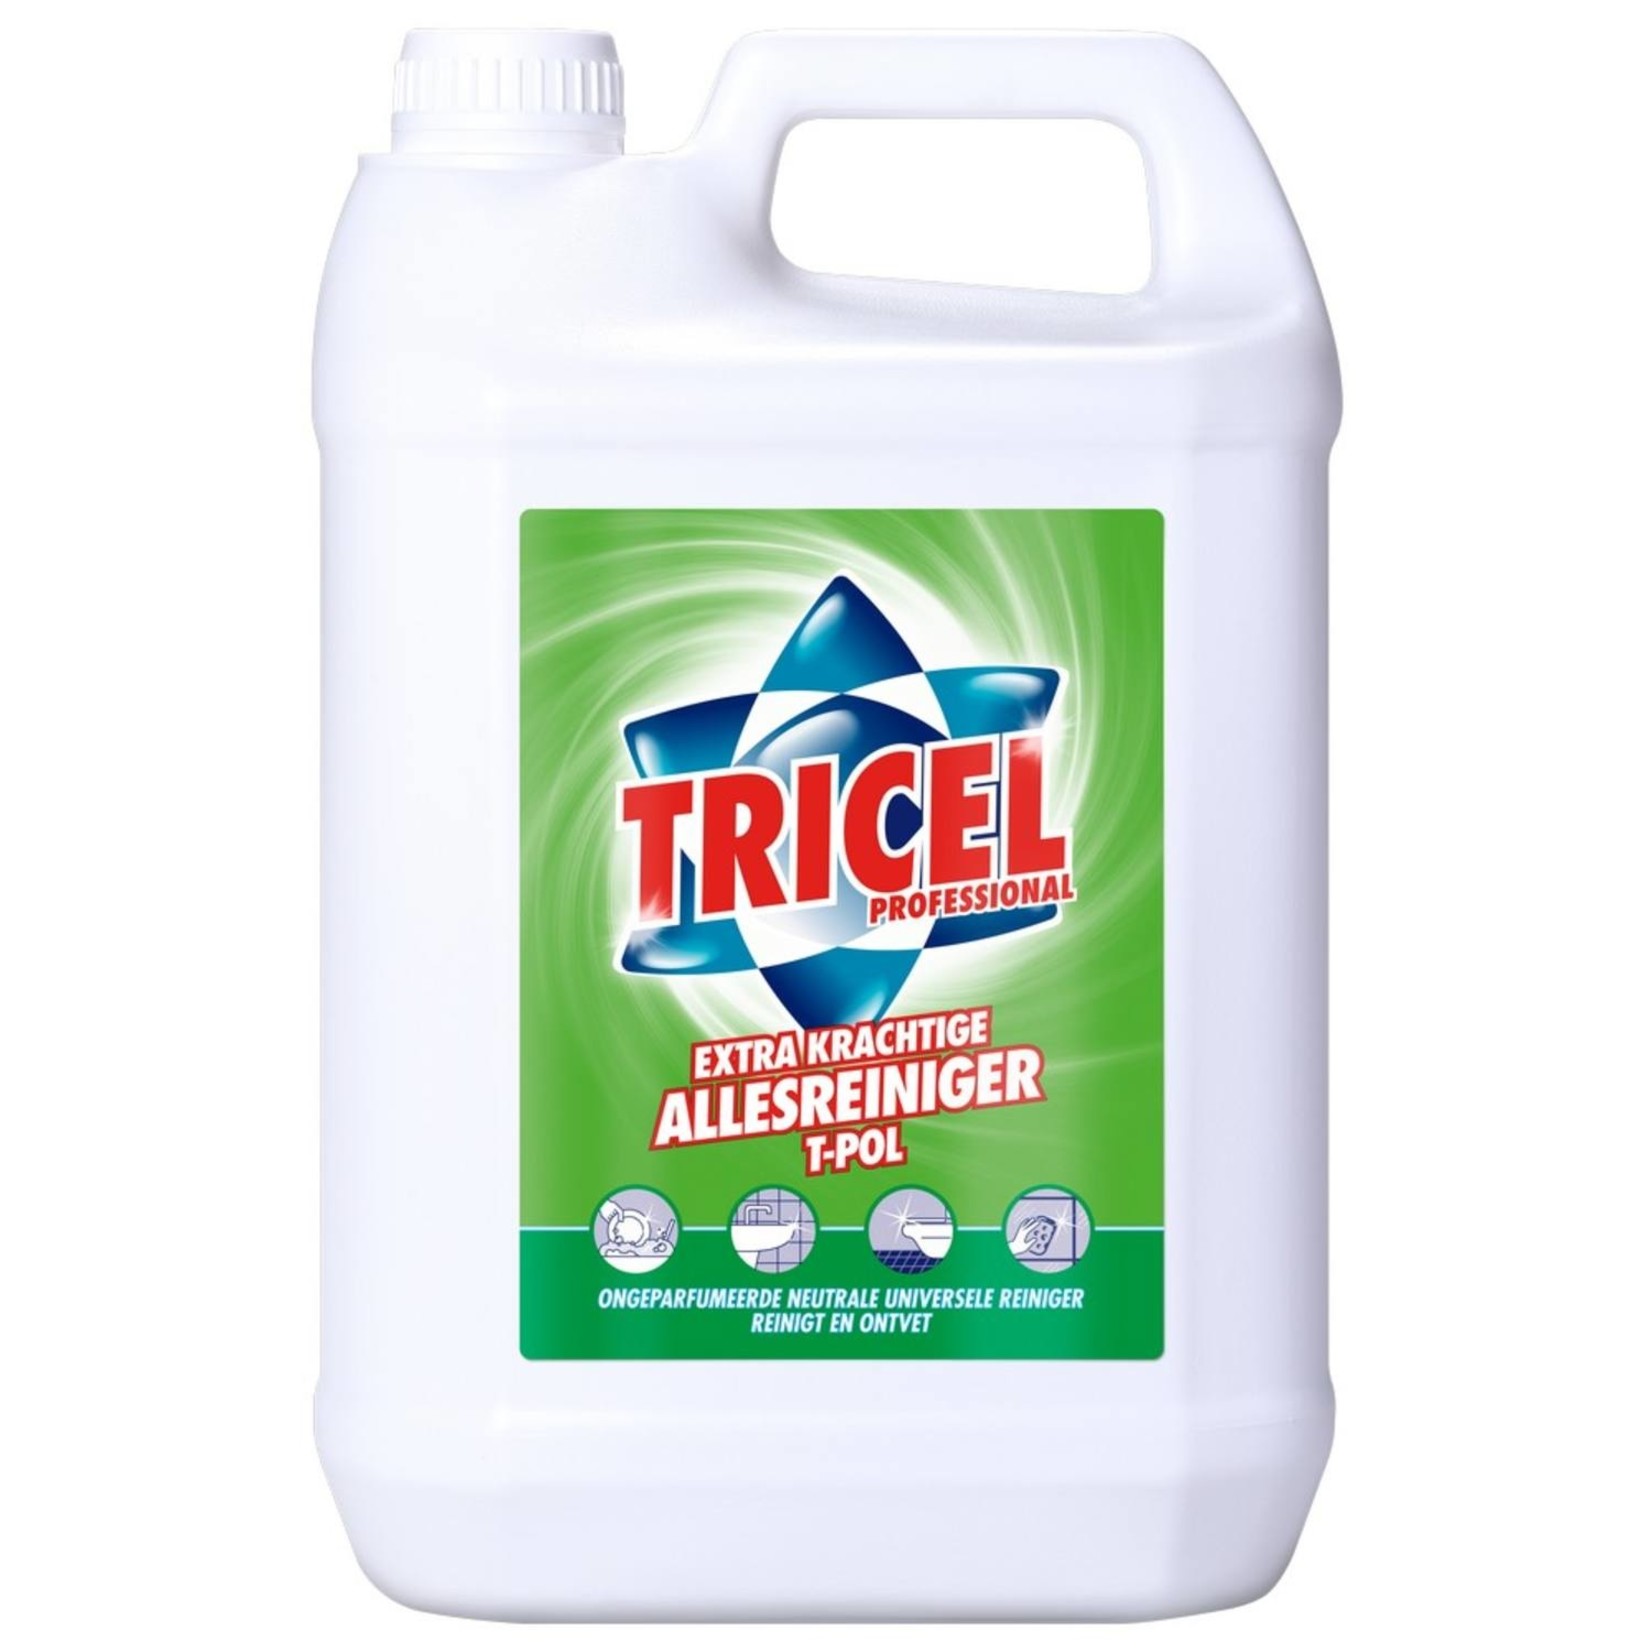 Tricel T-Pol allesreiniger 5 liter